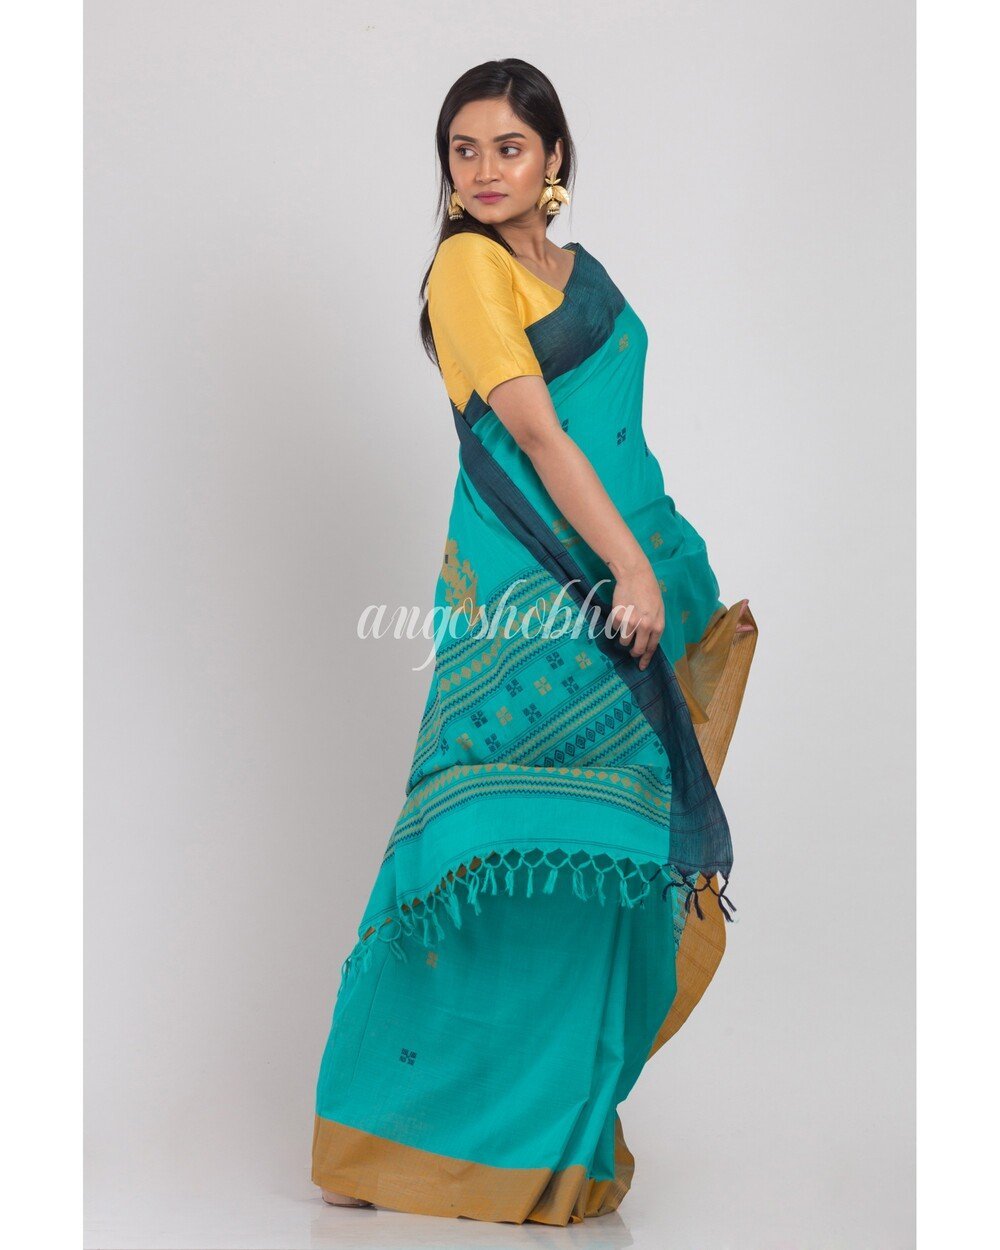 Women's Light Blue Handloom Cotton Saree - Angoshobha